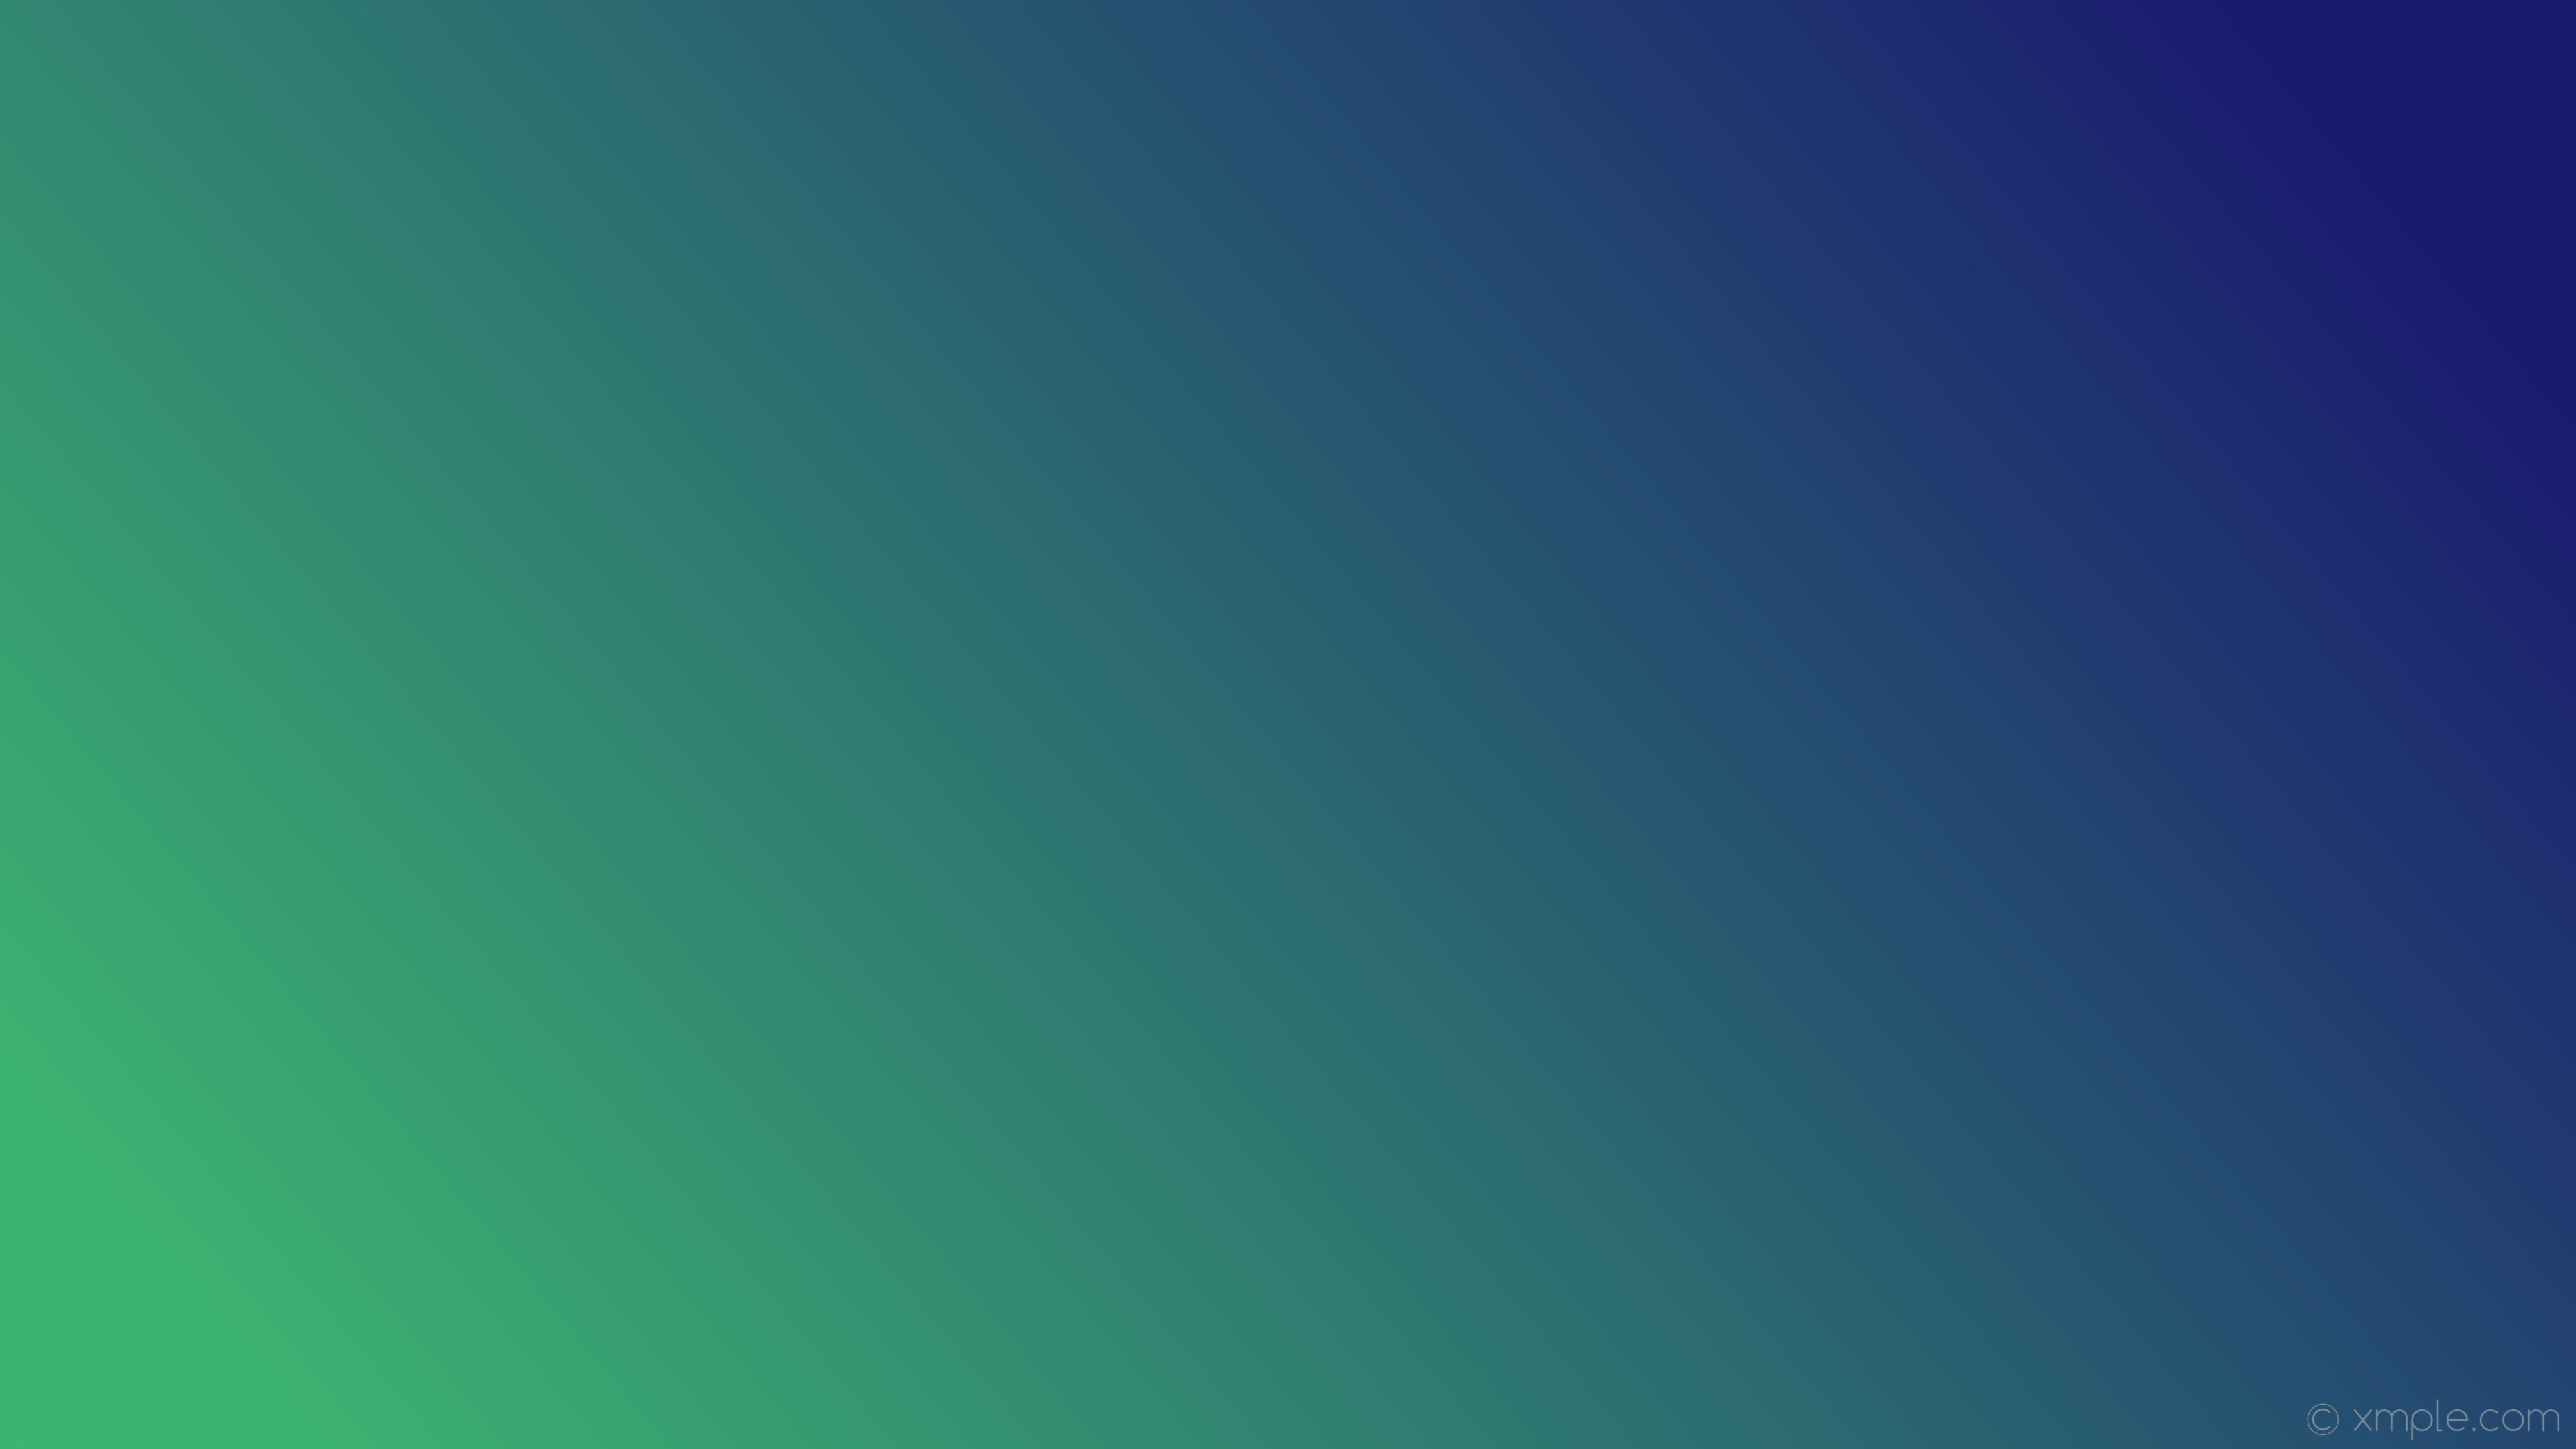 3840x2160 ... Wallpaper linear blue gradient #add8e6 #00bfff 45Â° ...